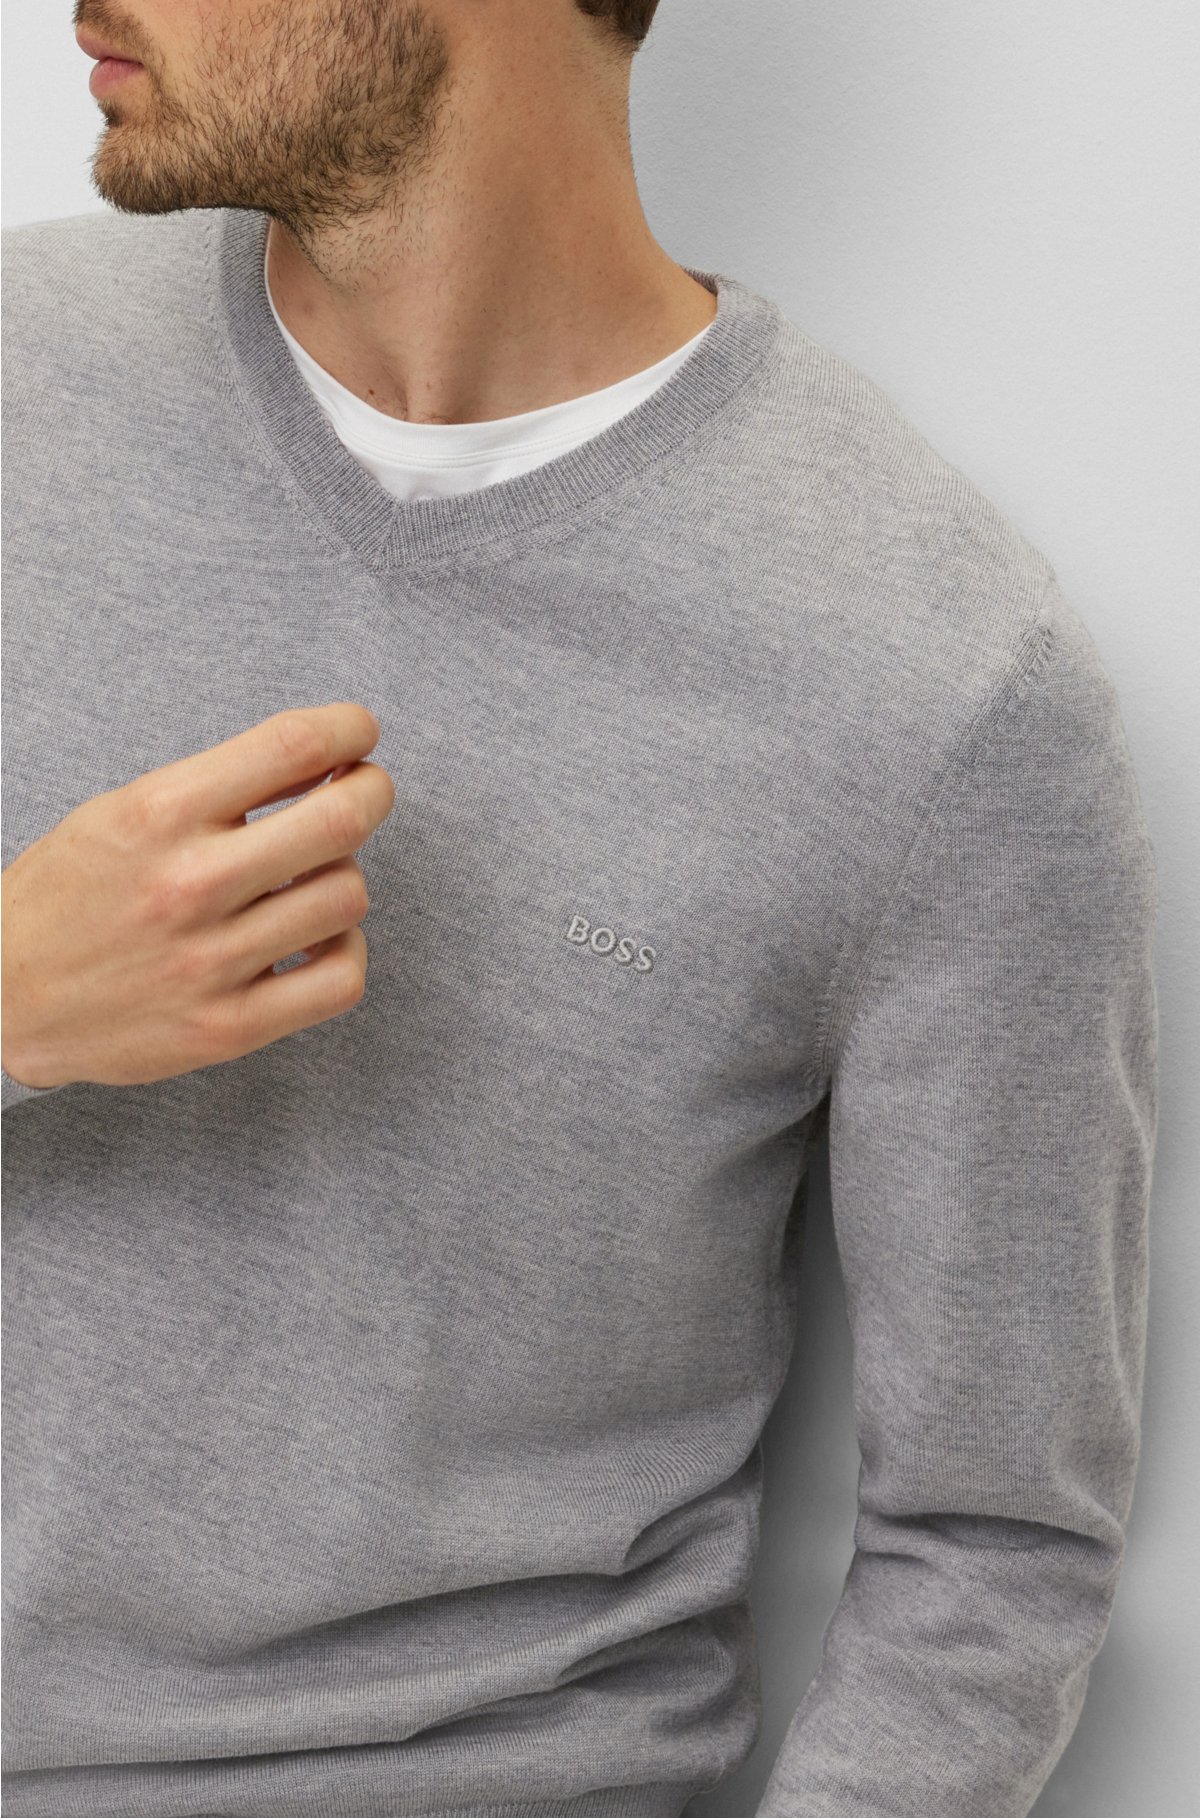 les Anders handtekening BOSS - V-neck sweater in wool